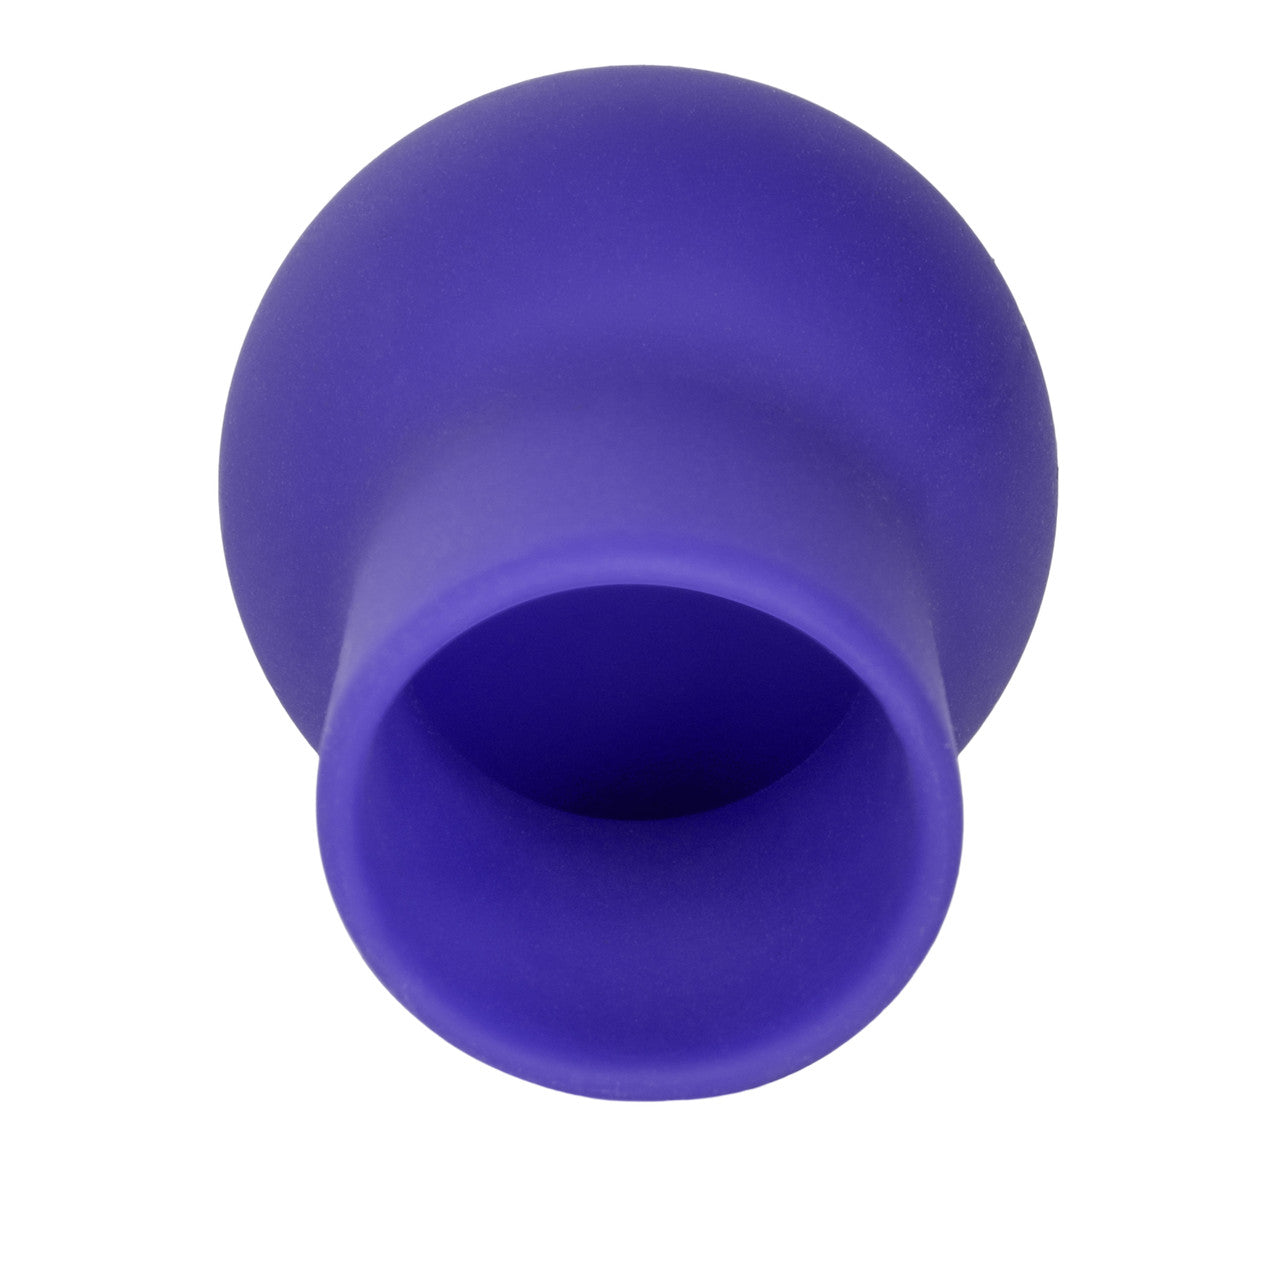 Nipple Play Silicone Advanced Nipple Suckers - Purple